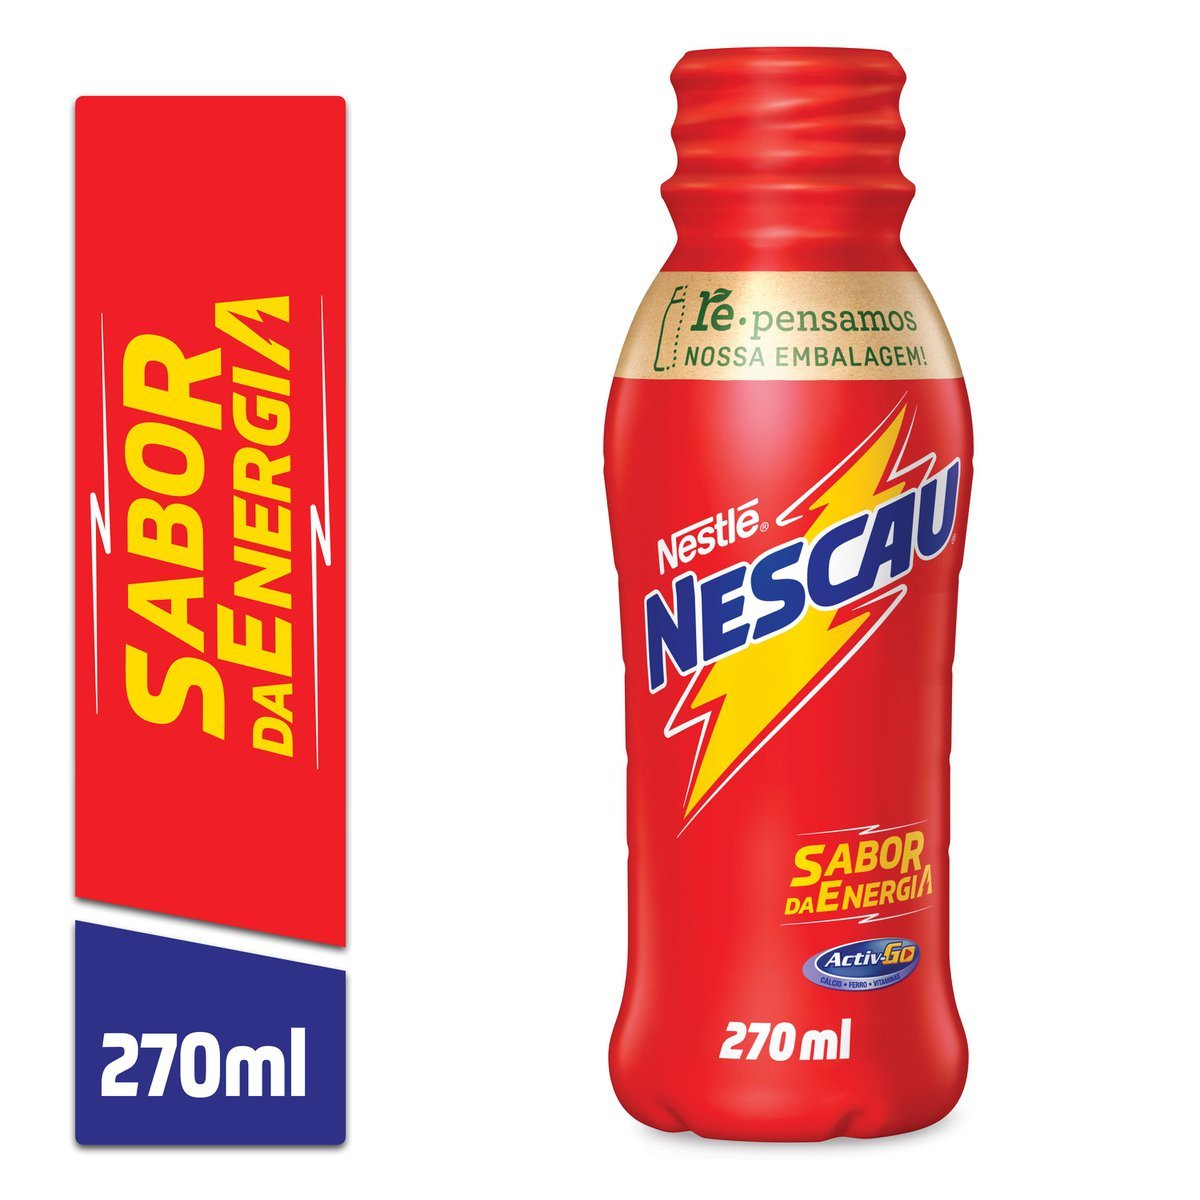 Bebida Láctea Nescau Nestlé 200ml Light